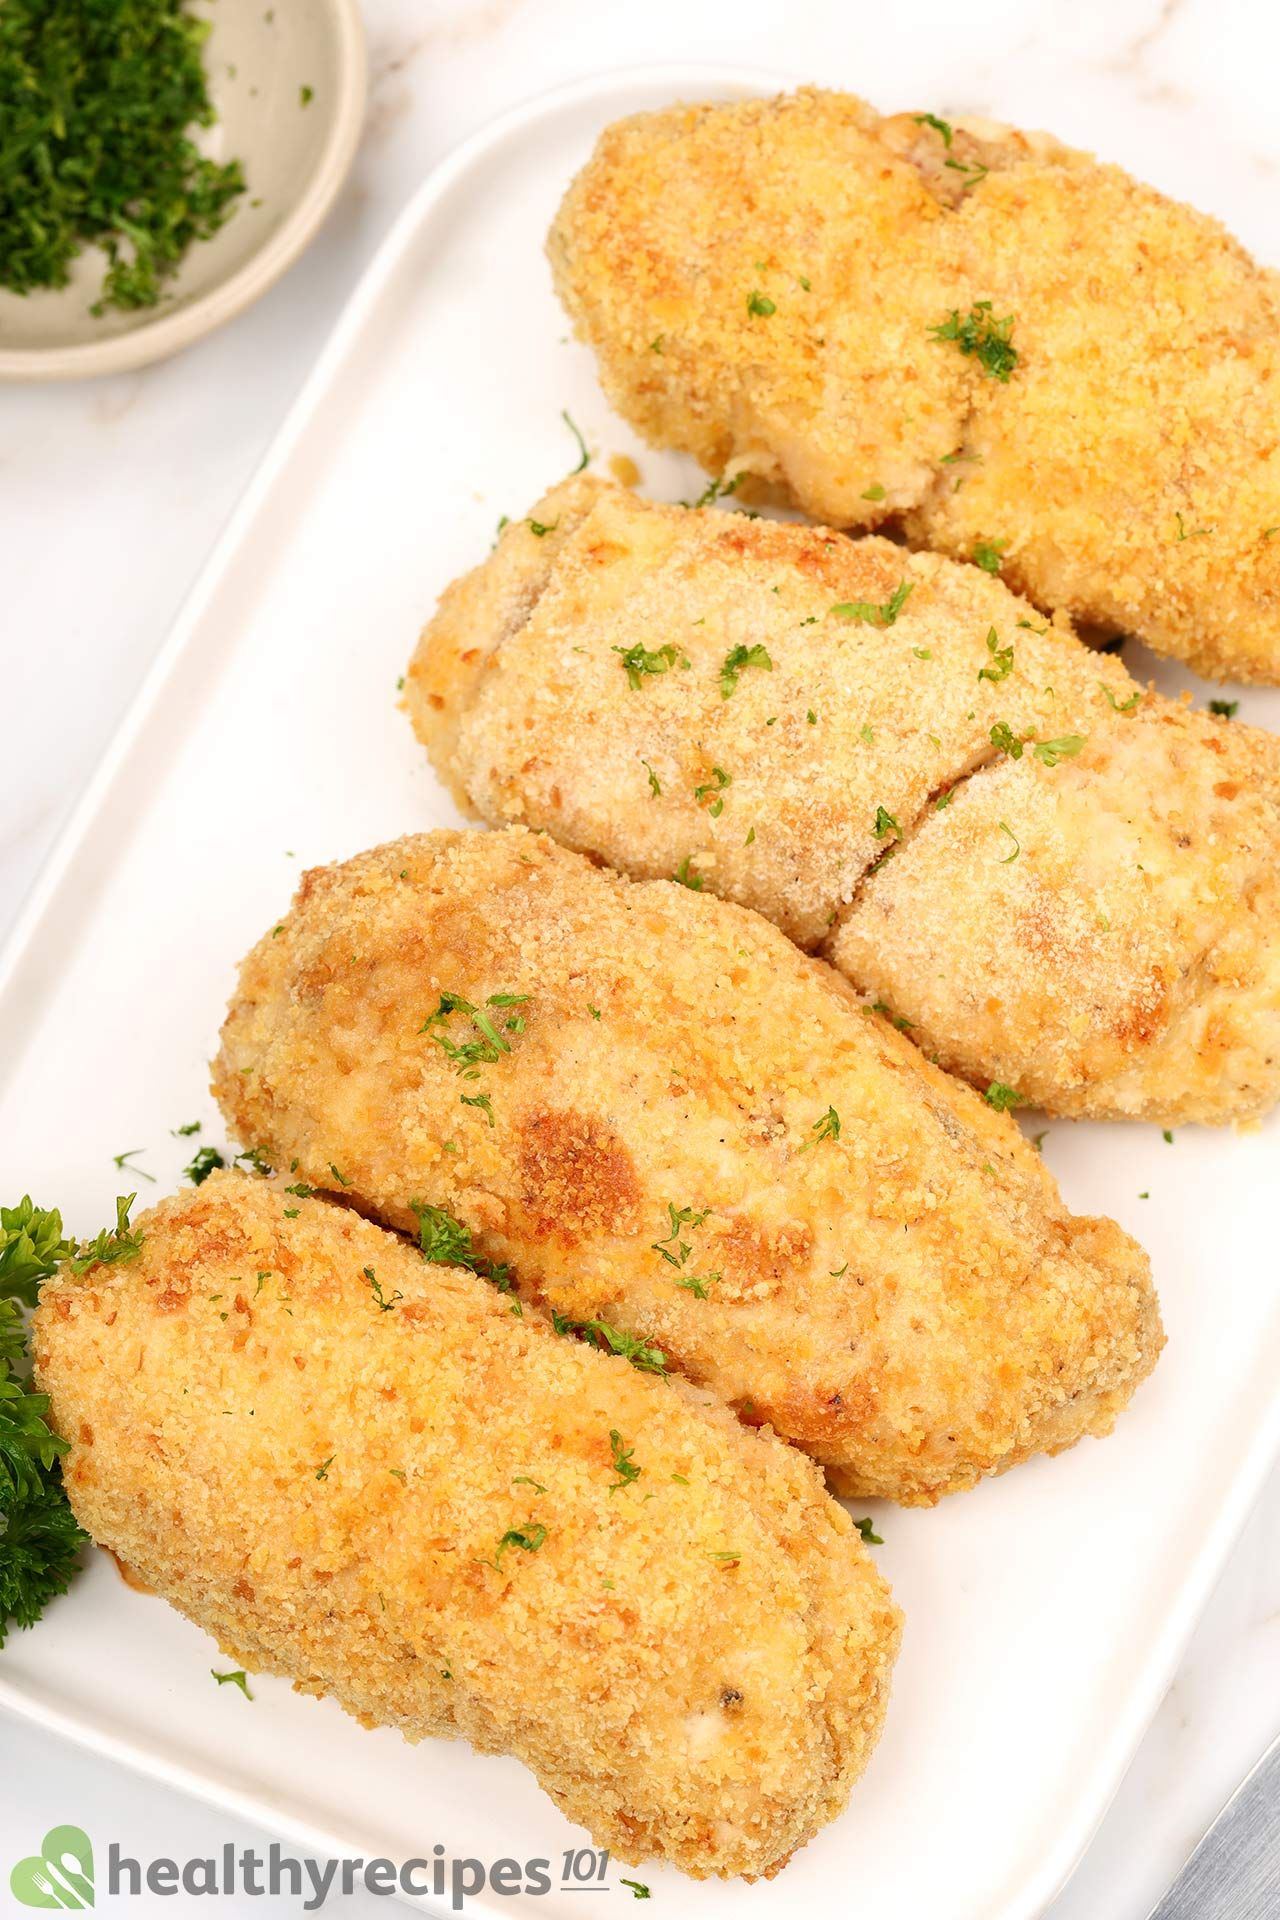 Can You Make Chicken Cordon Bleu in the Air Fryer?